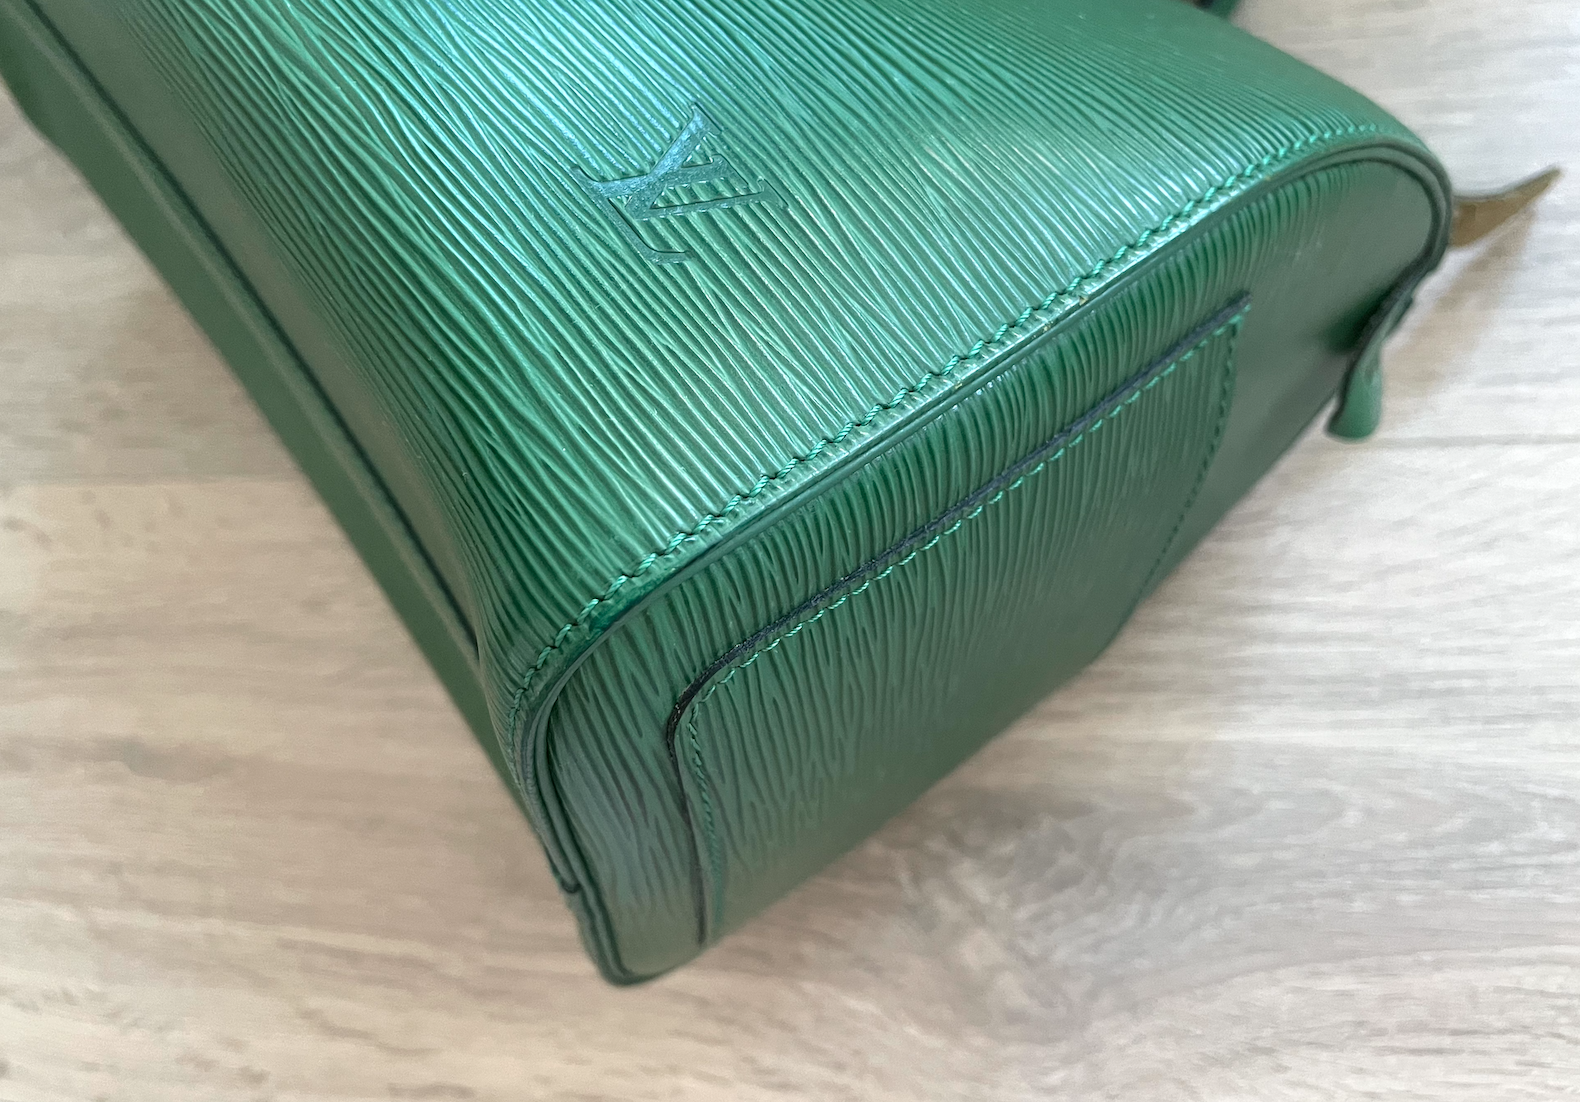 LOUIS VUITTON MONOGRAM Perfo Green SPEEDY 30 Bag Handbag #10 Rise